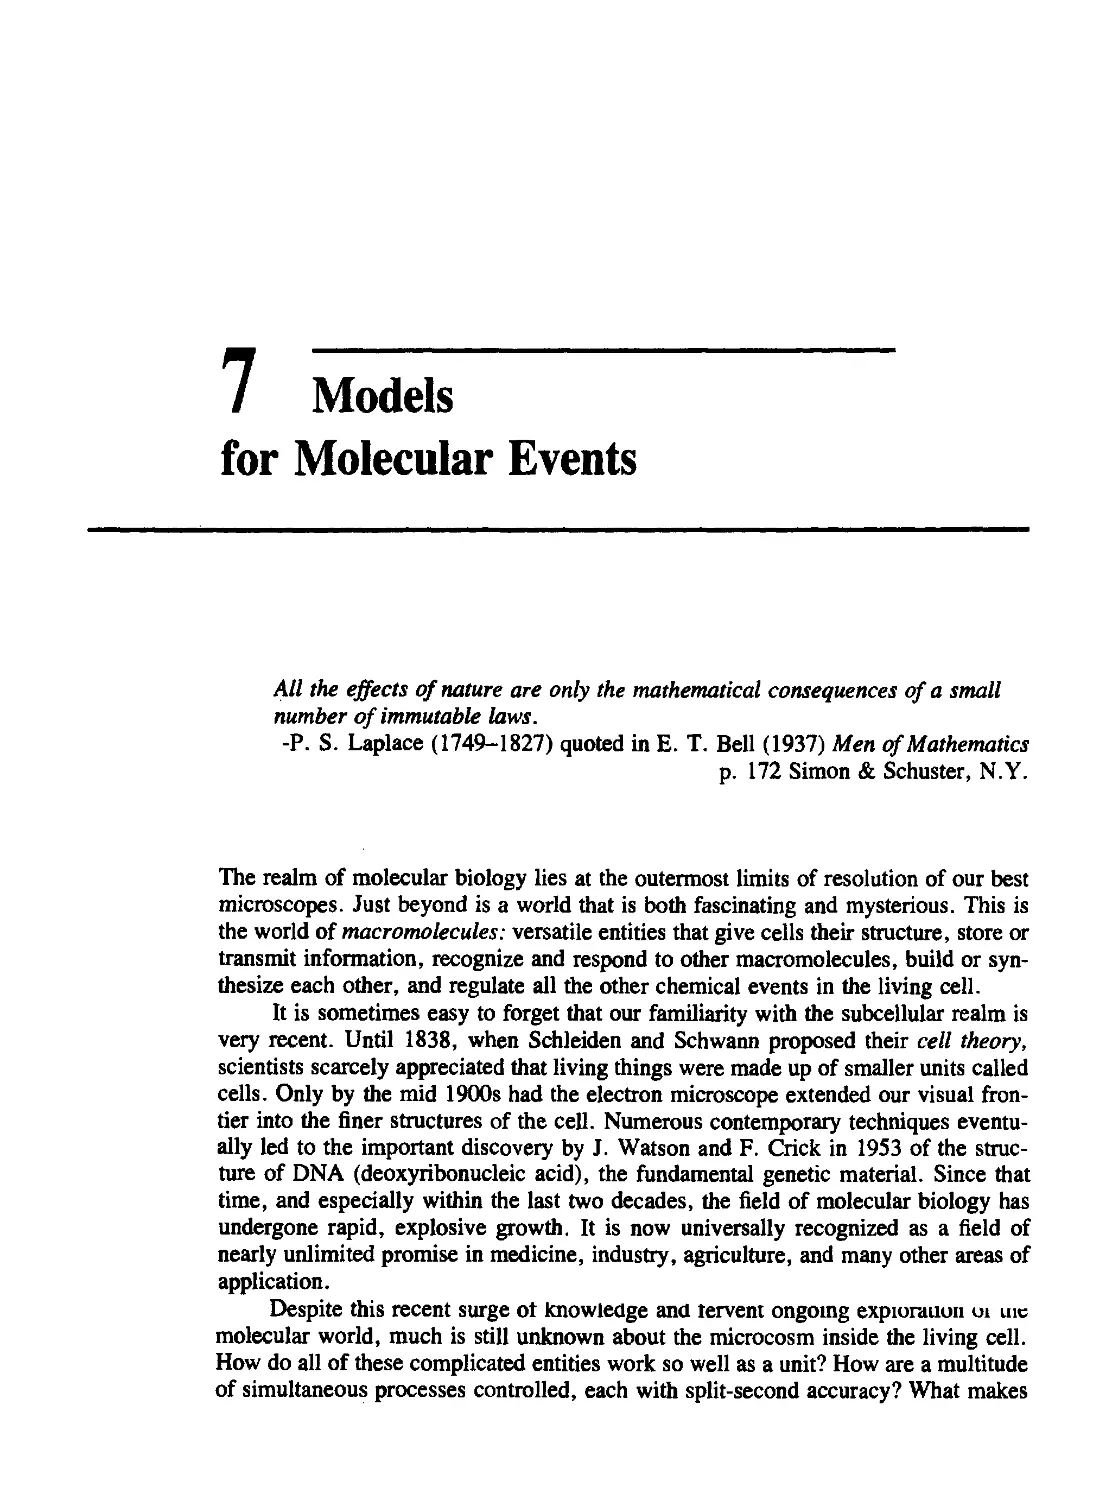 Chapter 7 Models for Molecular Events